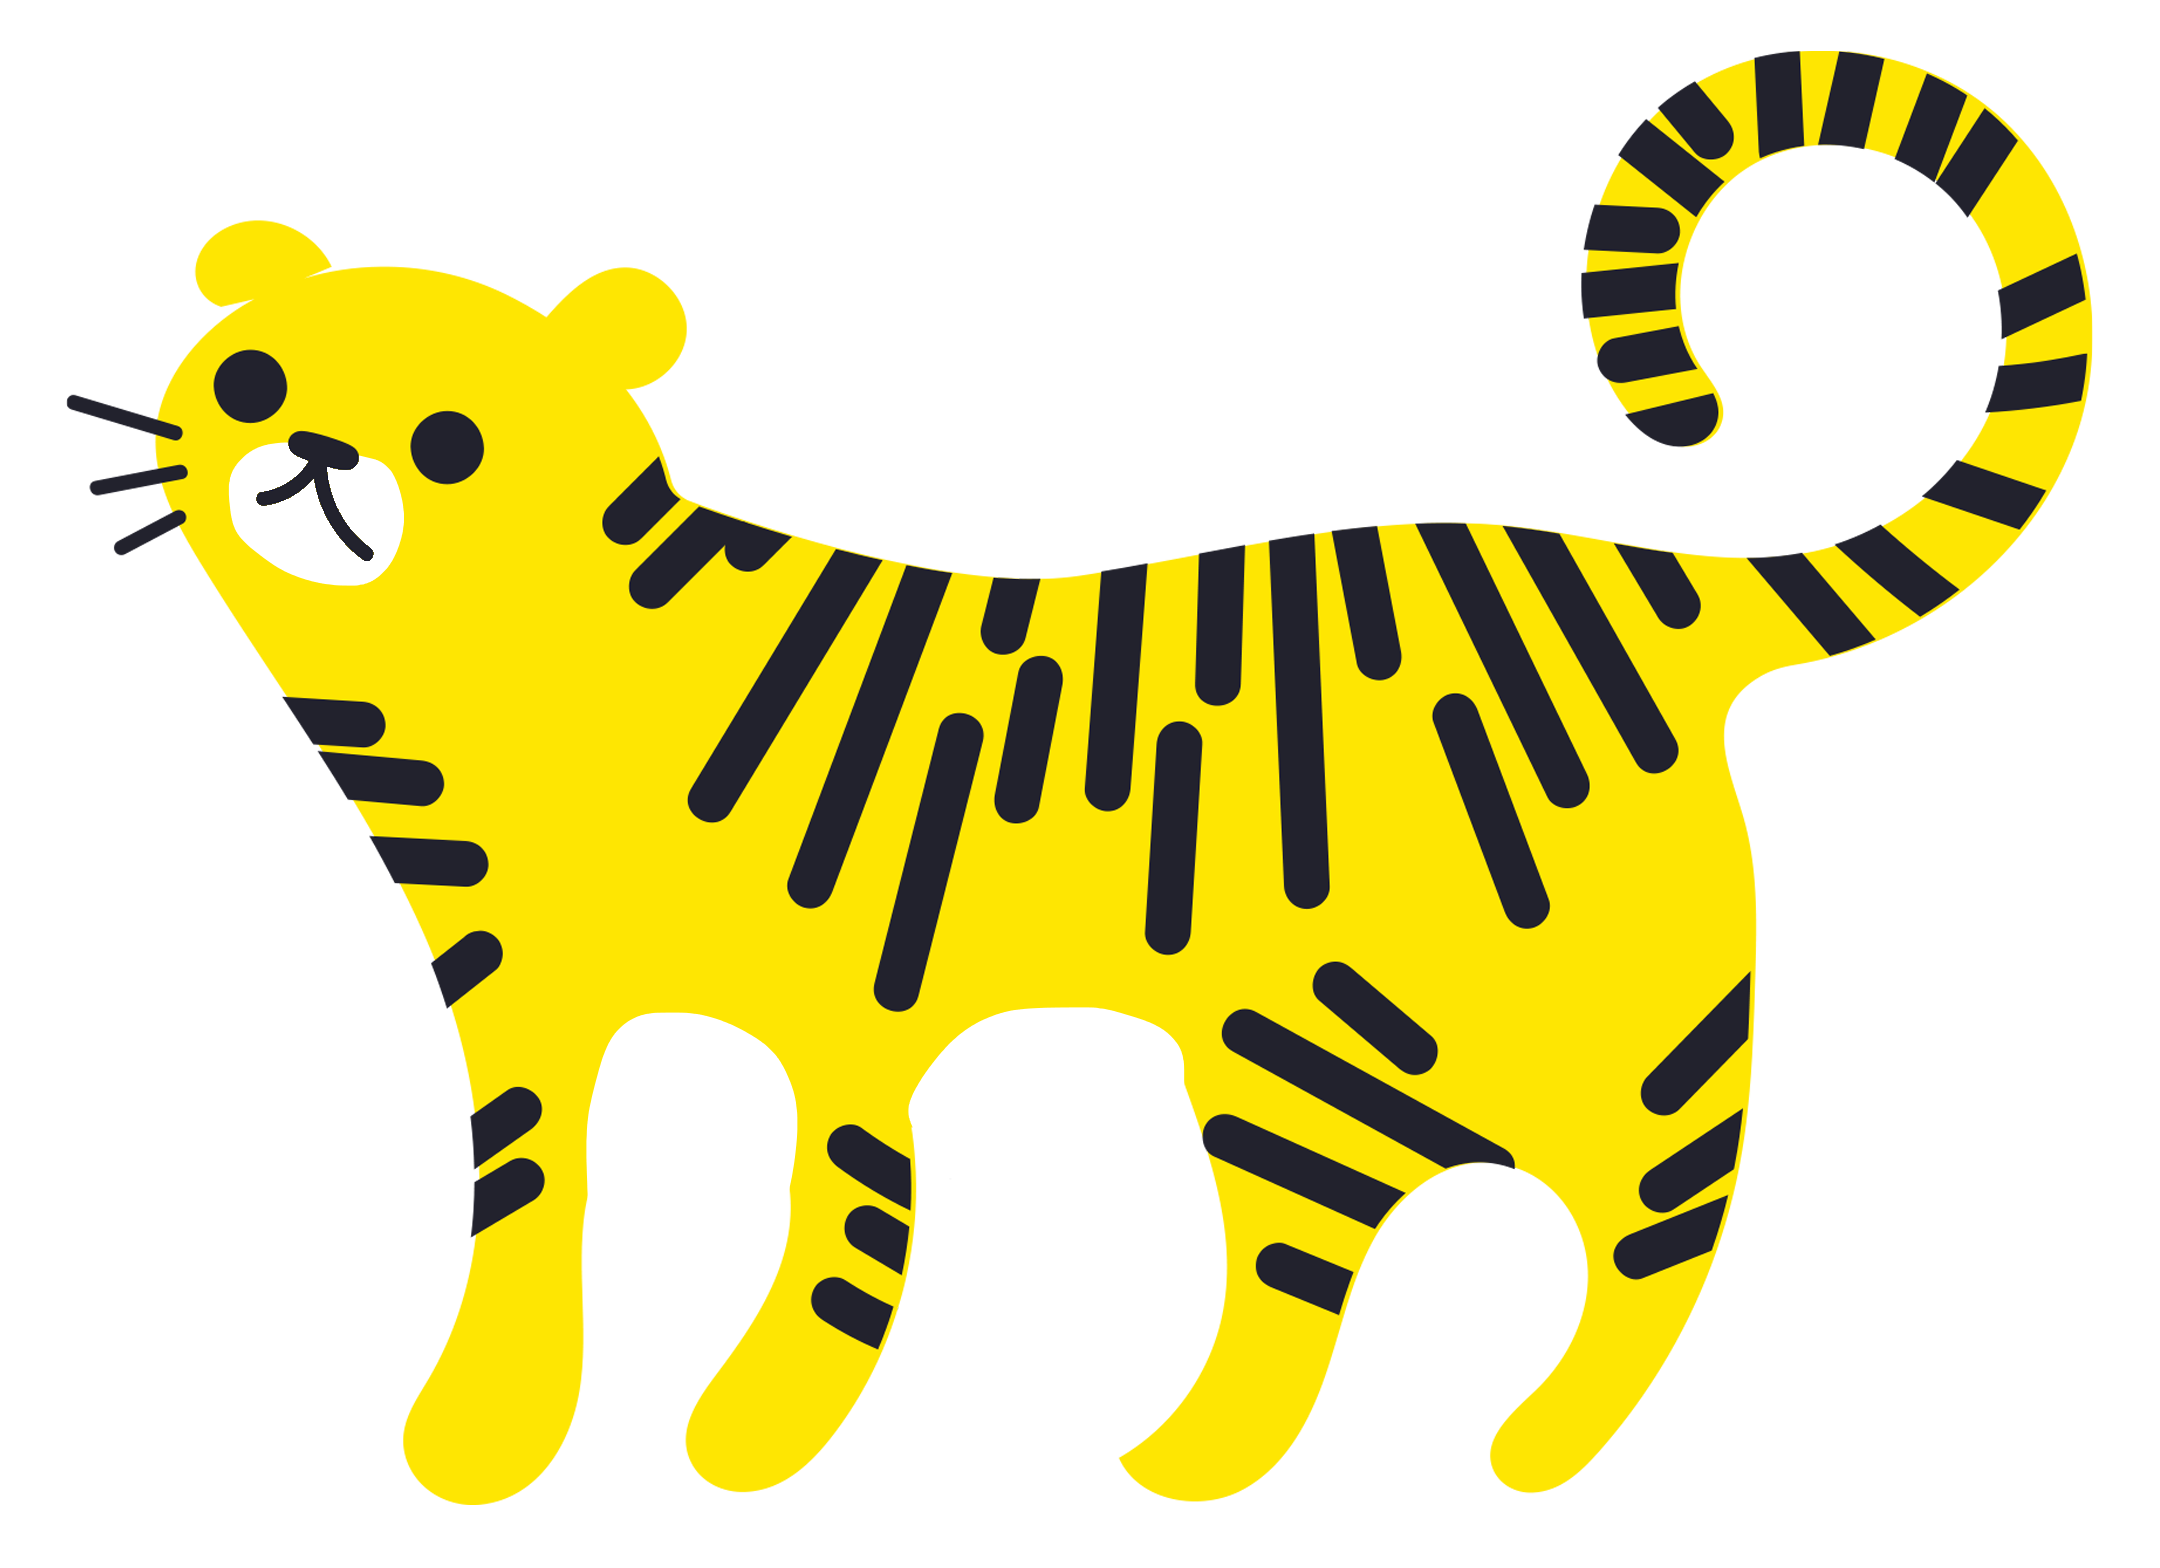 tigre 1